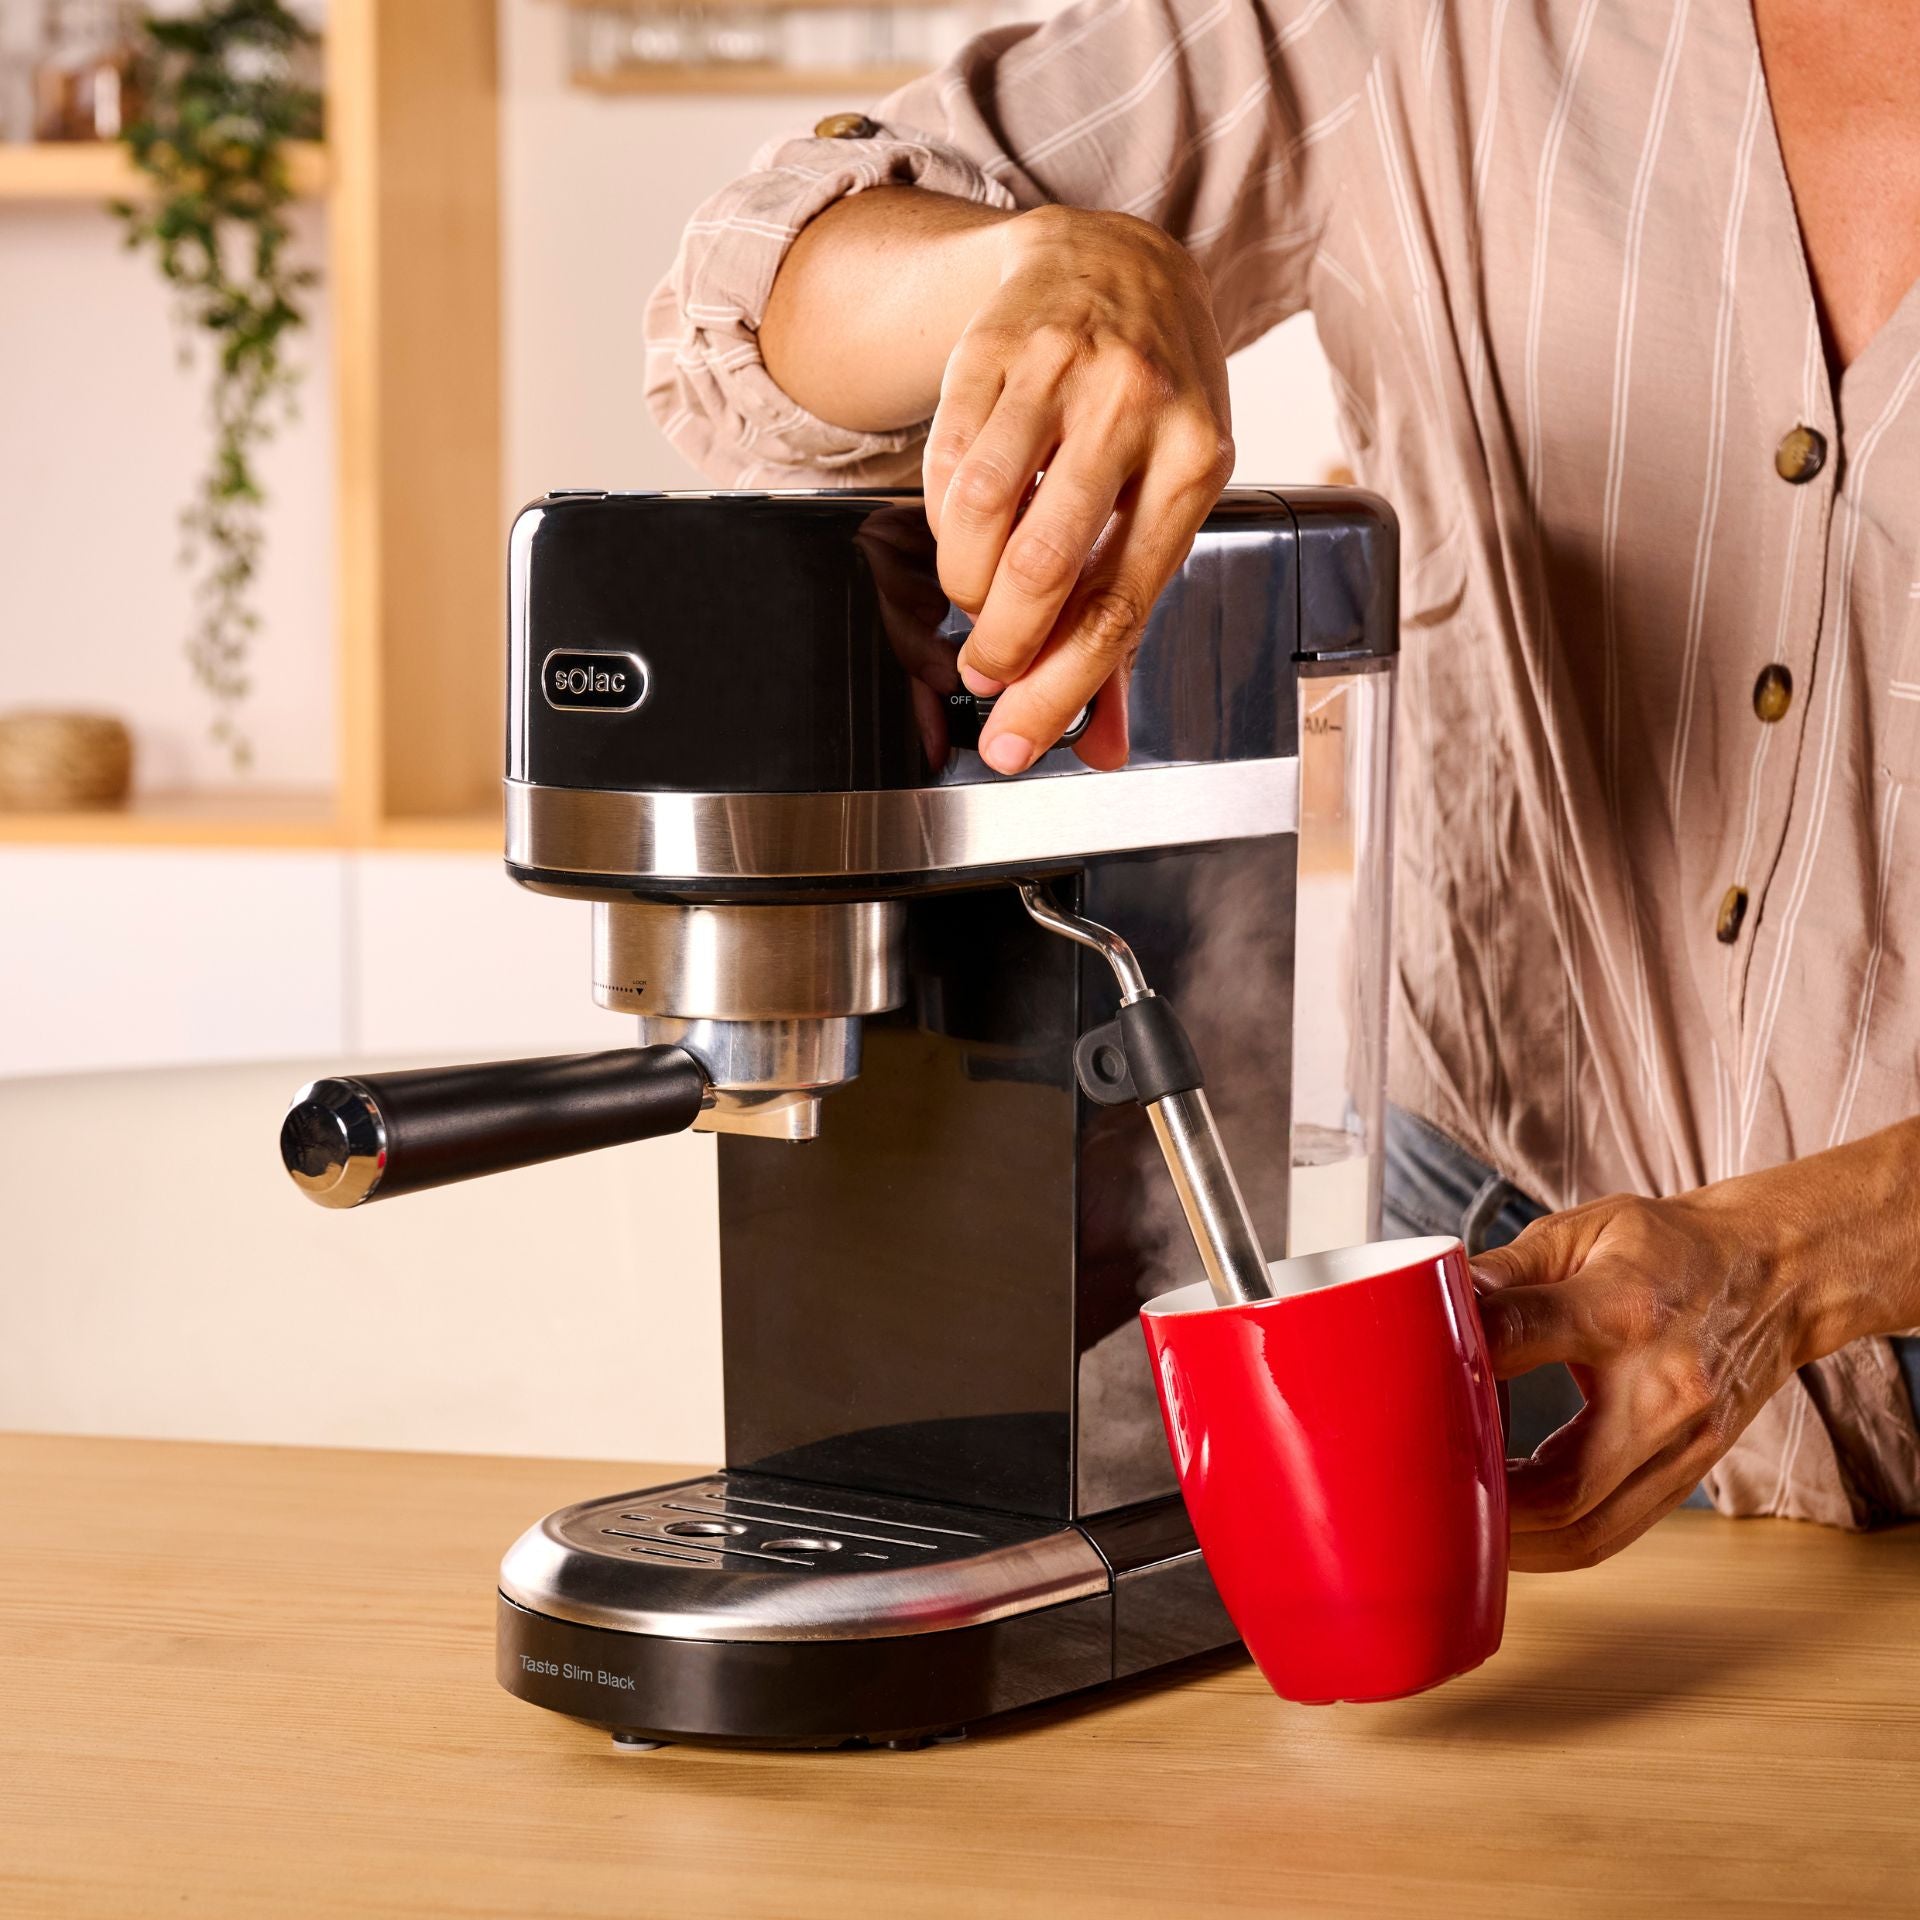 Cafetera espresso Solac CE4523 Taste Slim ProCap, compatible cápsulas